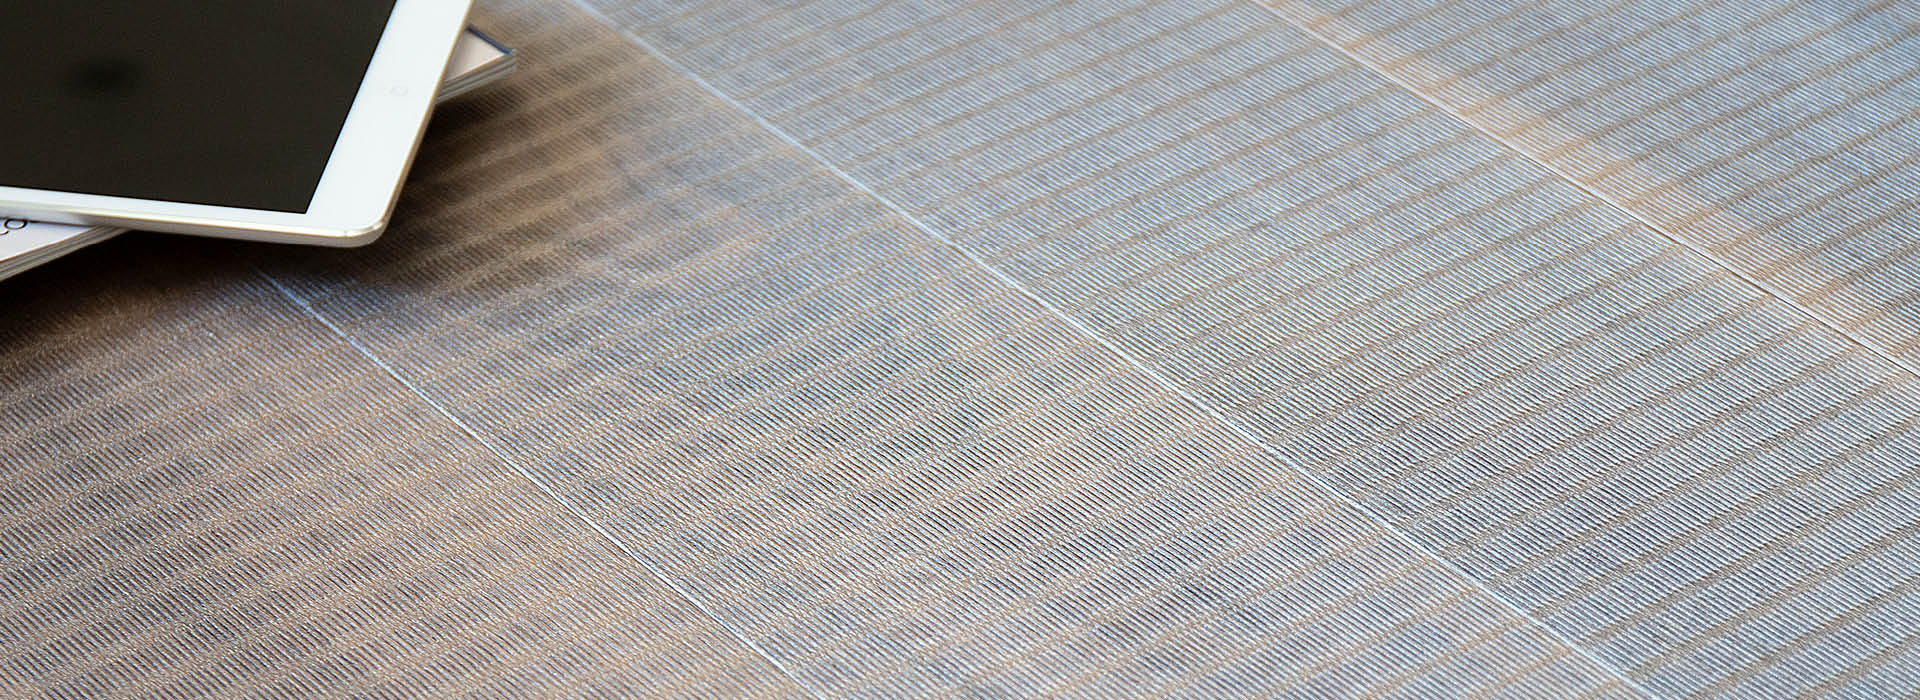 texture-design-tatami-planks-1-215